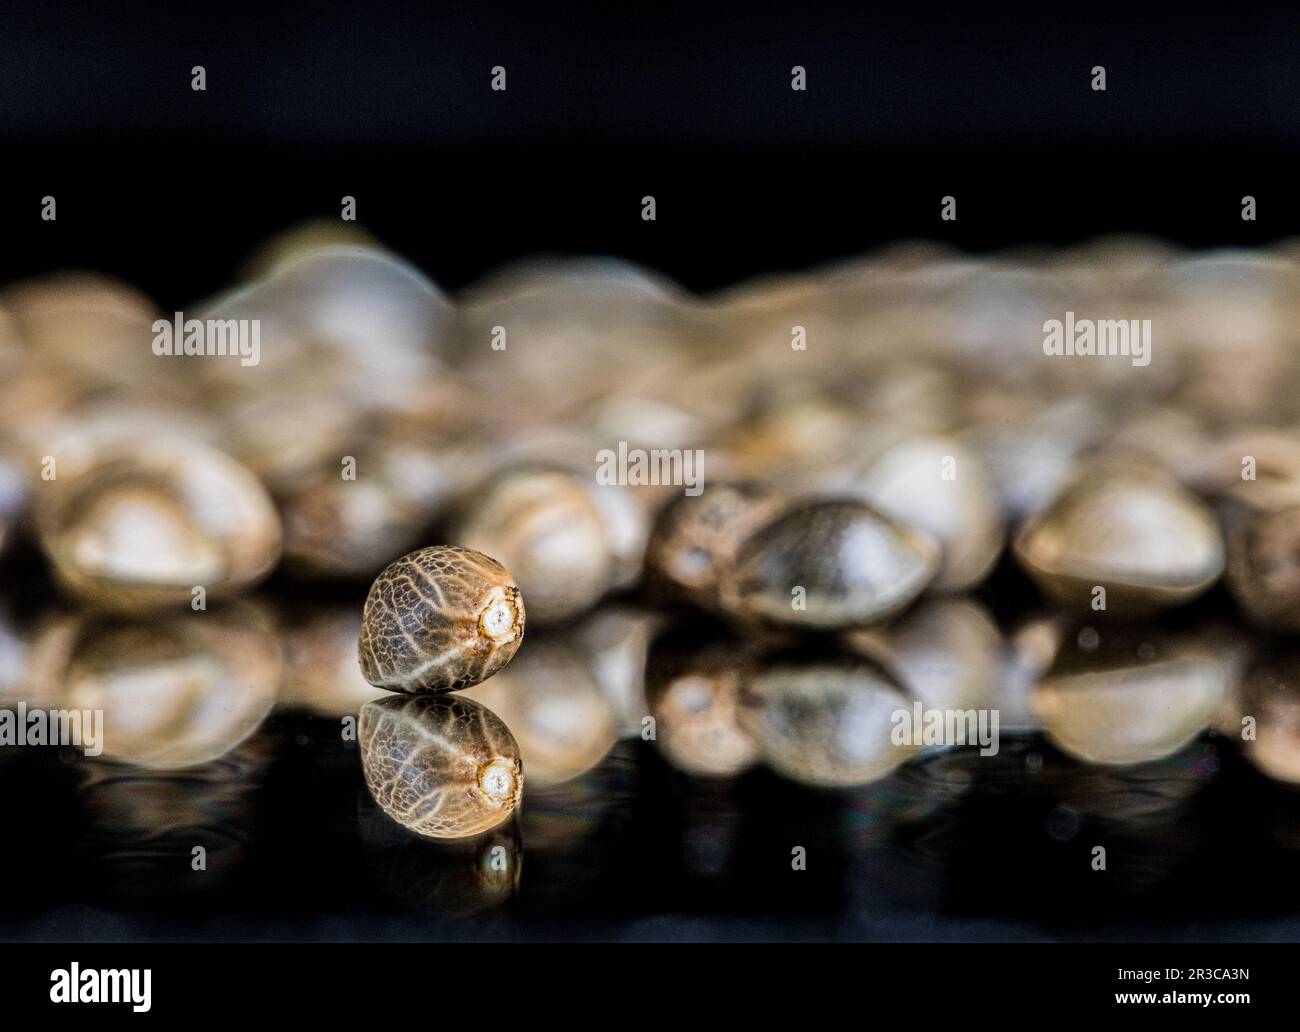 Macro Close-up Focus of Cannabis Marijuana Seeds on a reflective black background Stock Photo